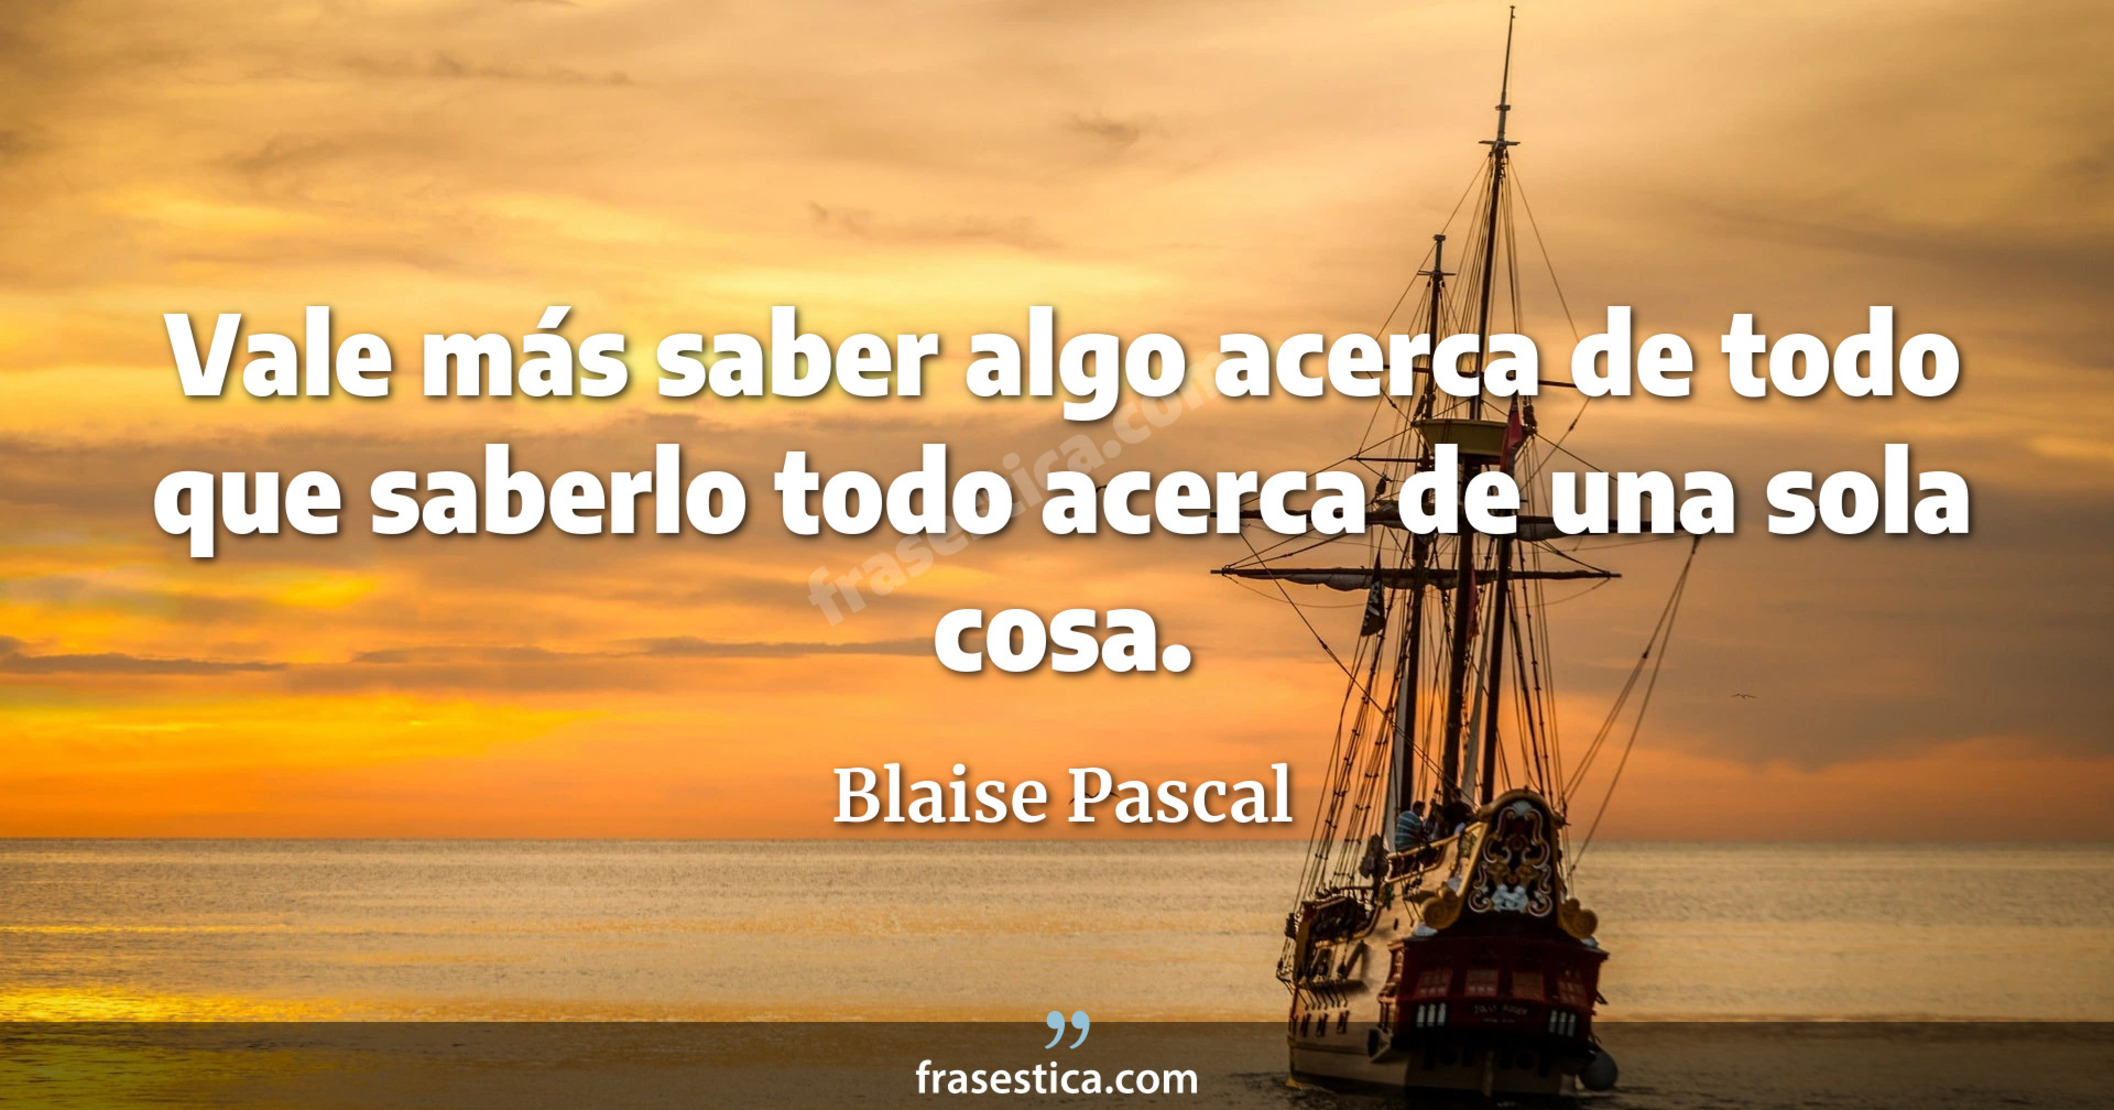 Vale más saber algo acerca de todo que saberlo todo acerca de una sola cosa. - Blaise Pascal